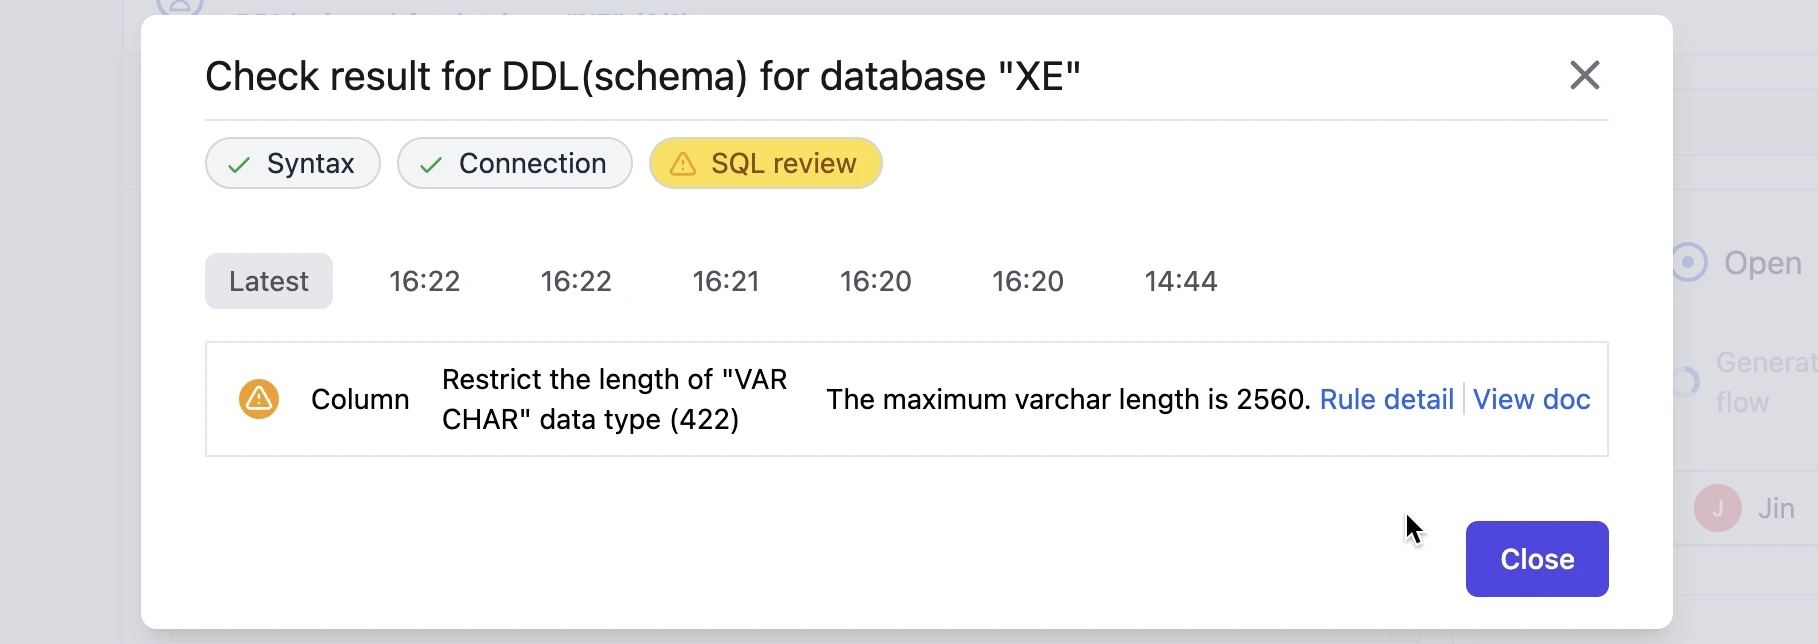 sql-review-column-maximum-varchar-length